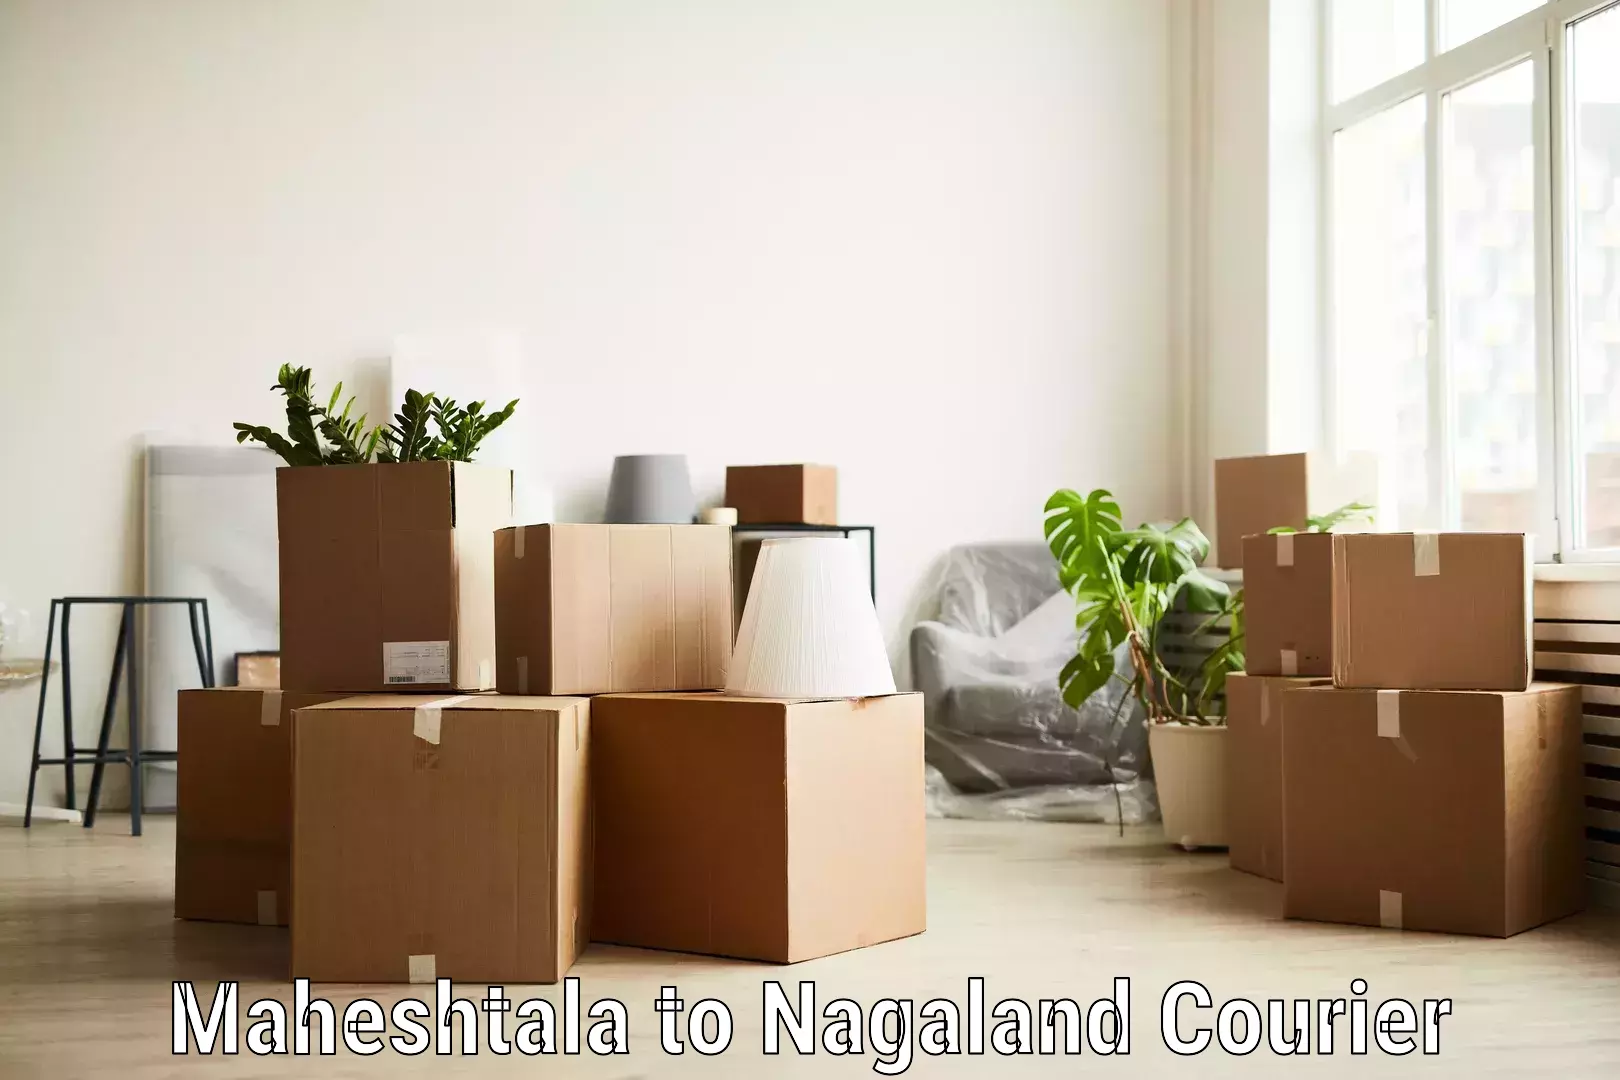 Courier service comparison Maheshtala to Kohima